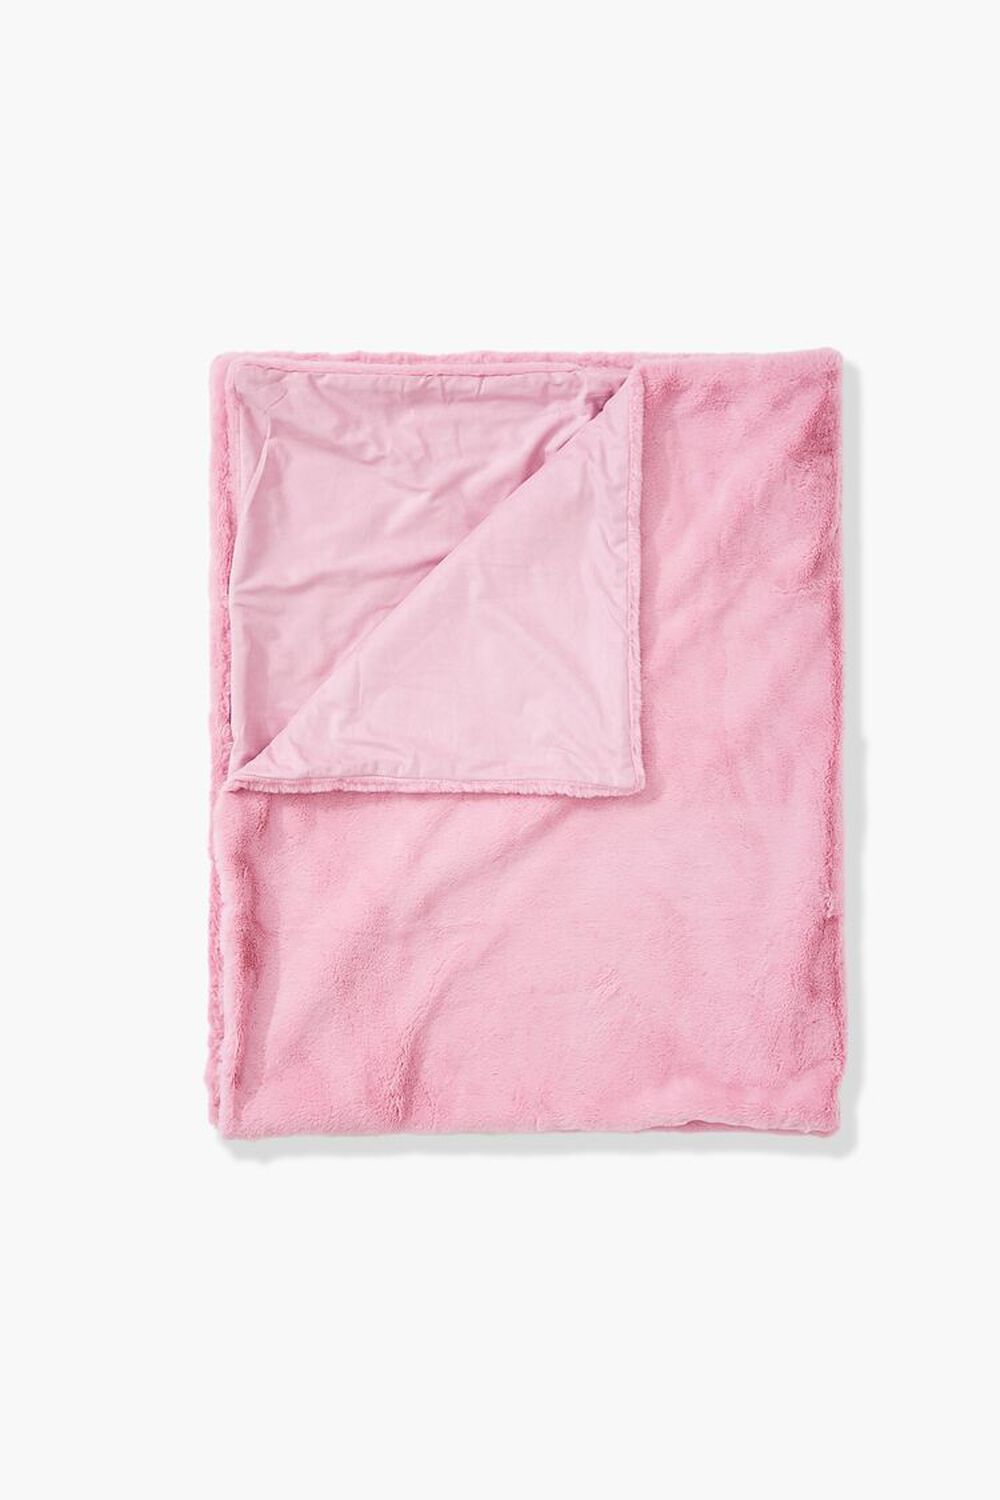 Pantone Shades of Pink Fleece Blanket